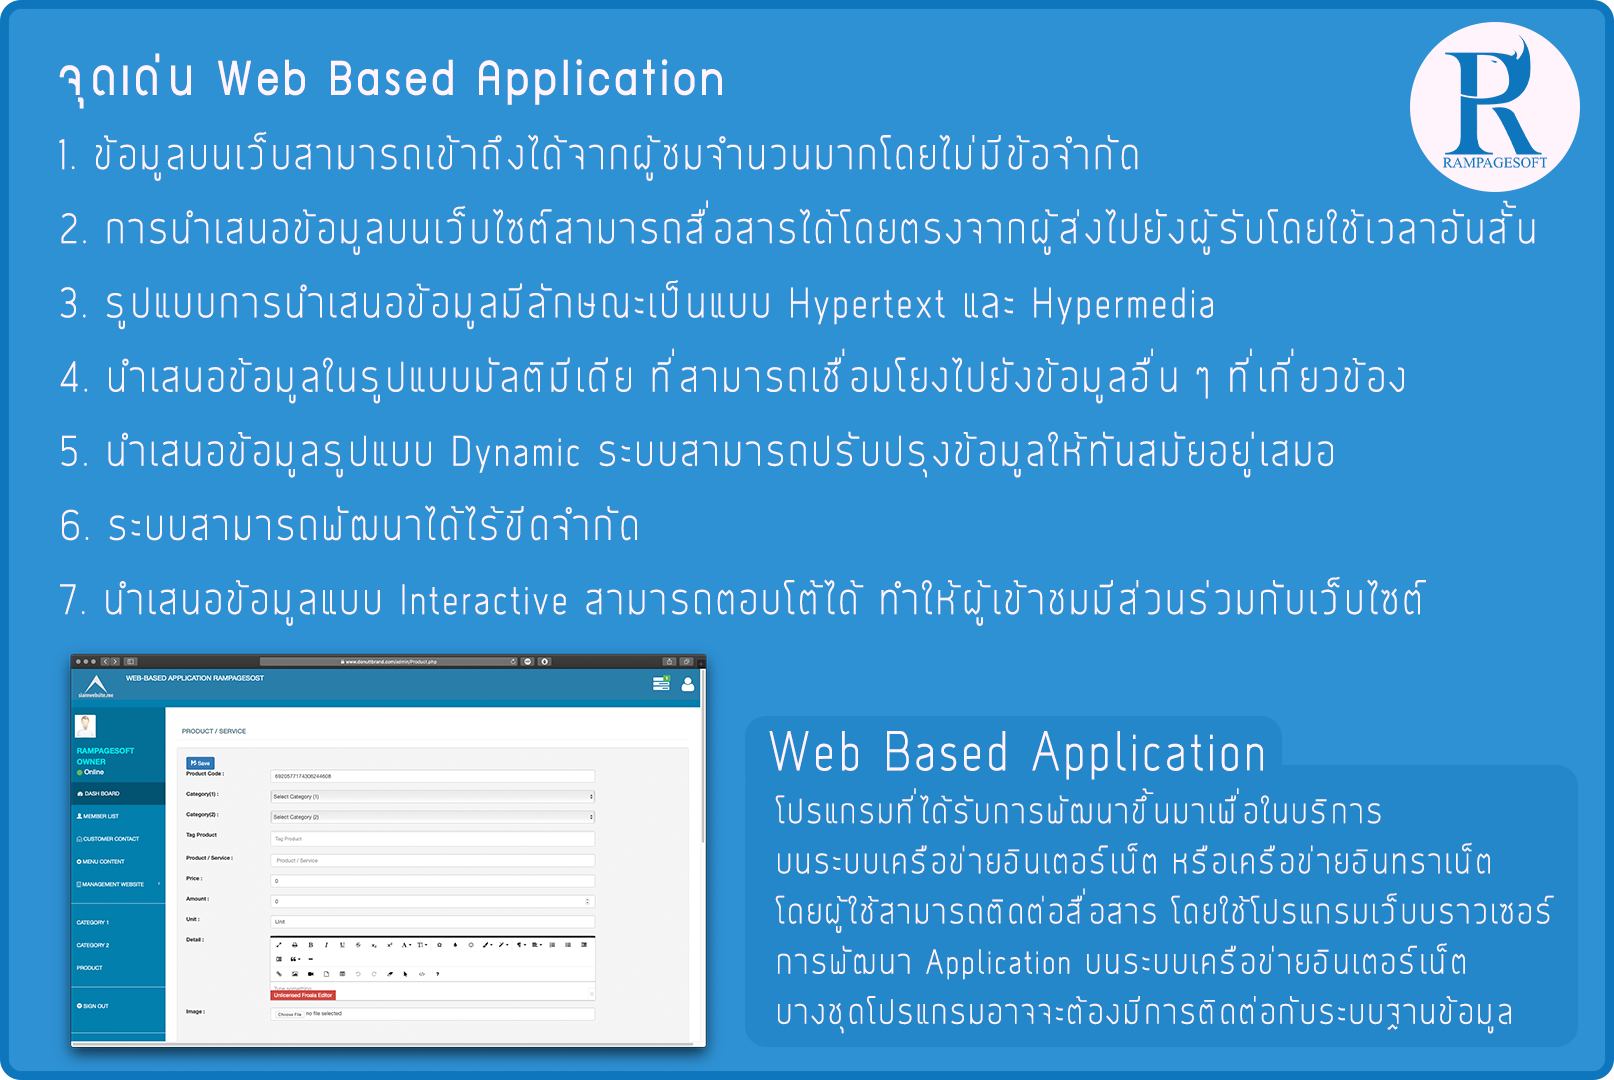 Web Based Application บทความ ข่าวสาร rampagesoft